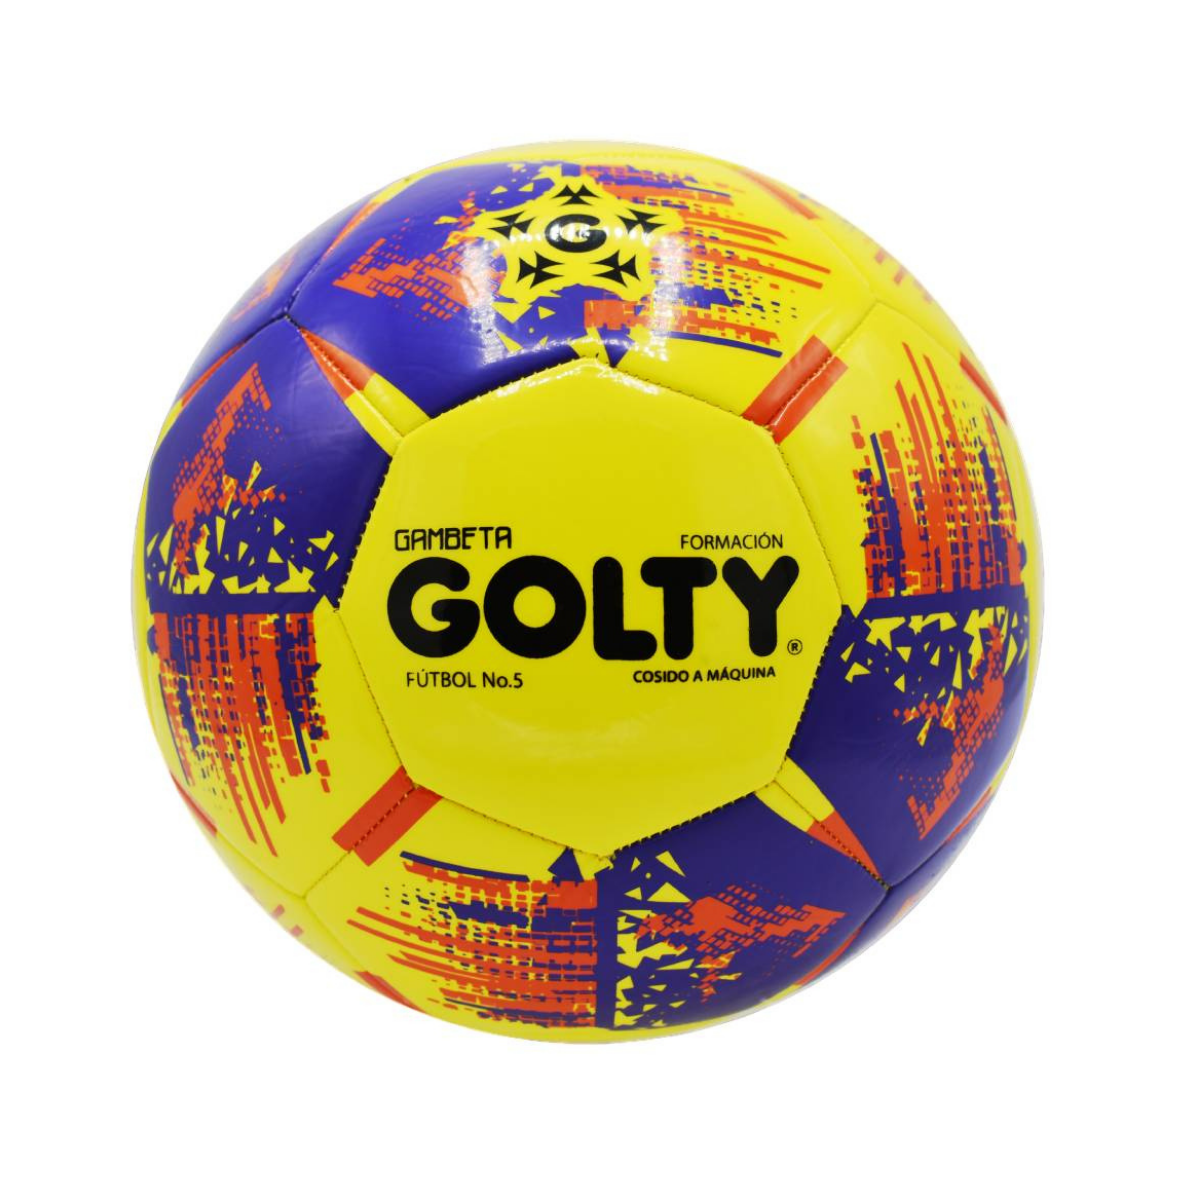 Balon Futbol Gambeta III GOLTY Numero 4